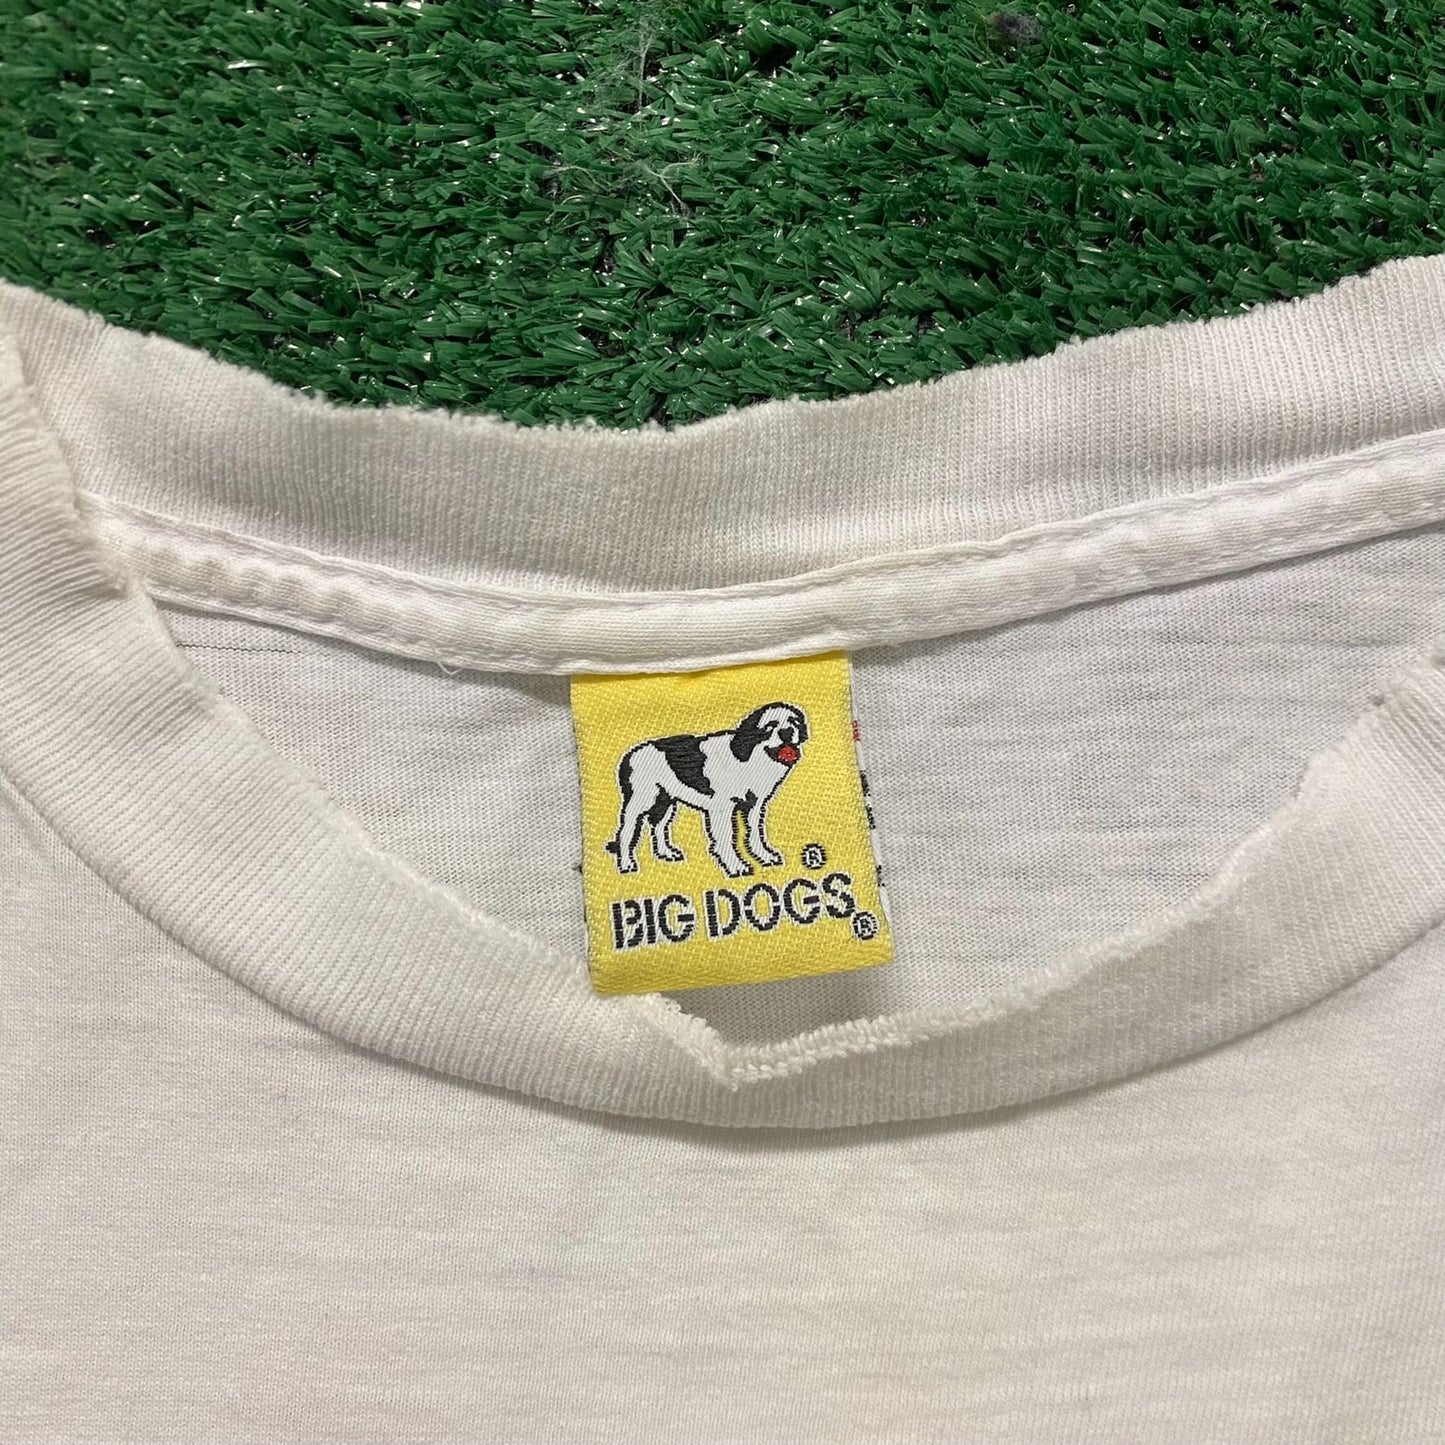 Big Dogs Baseball Vintage 90s Sports Humor Parody T-Shirt